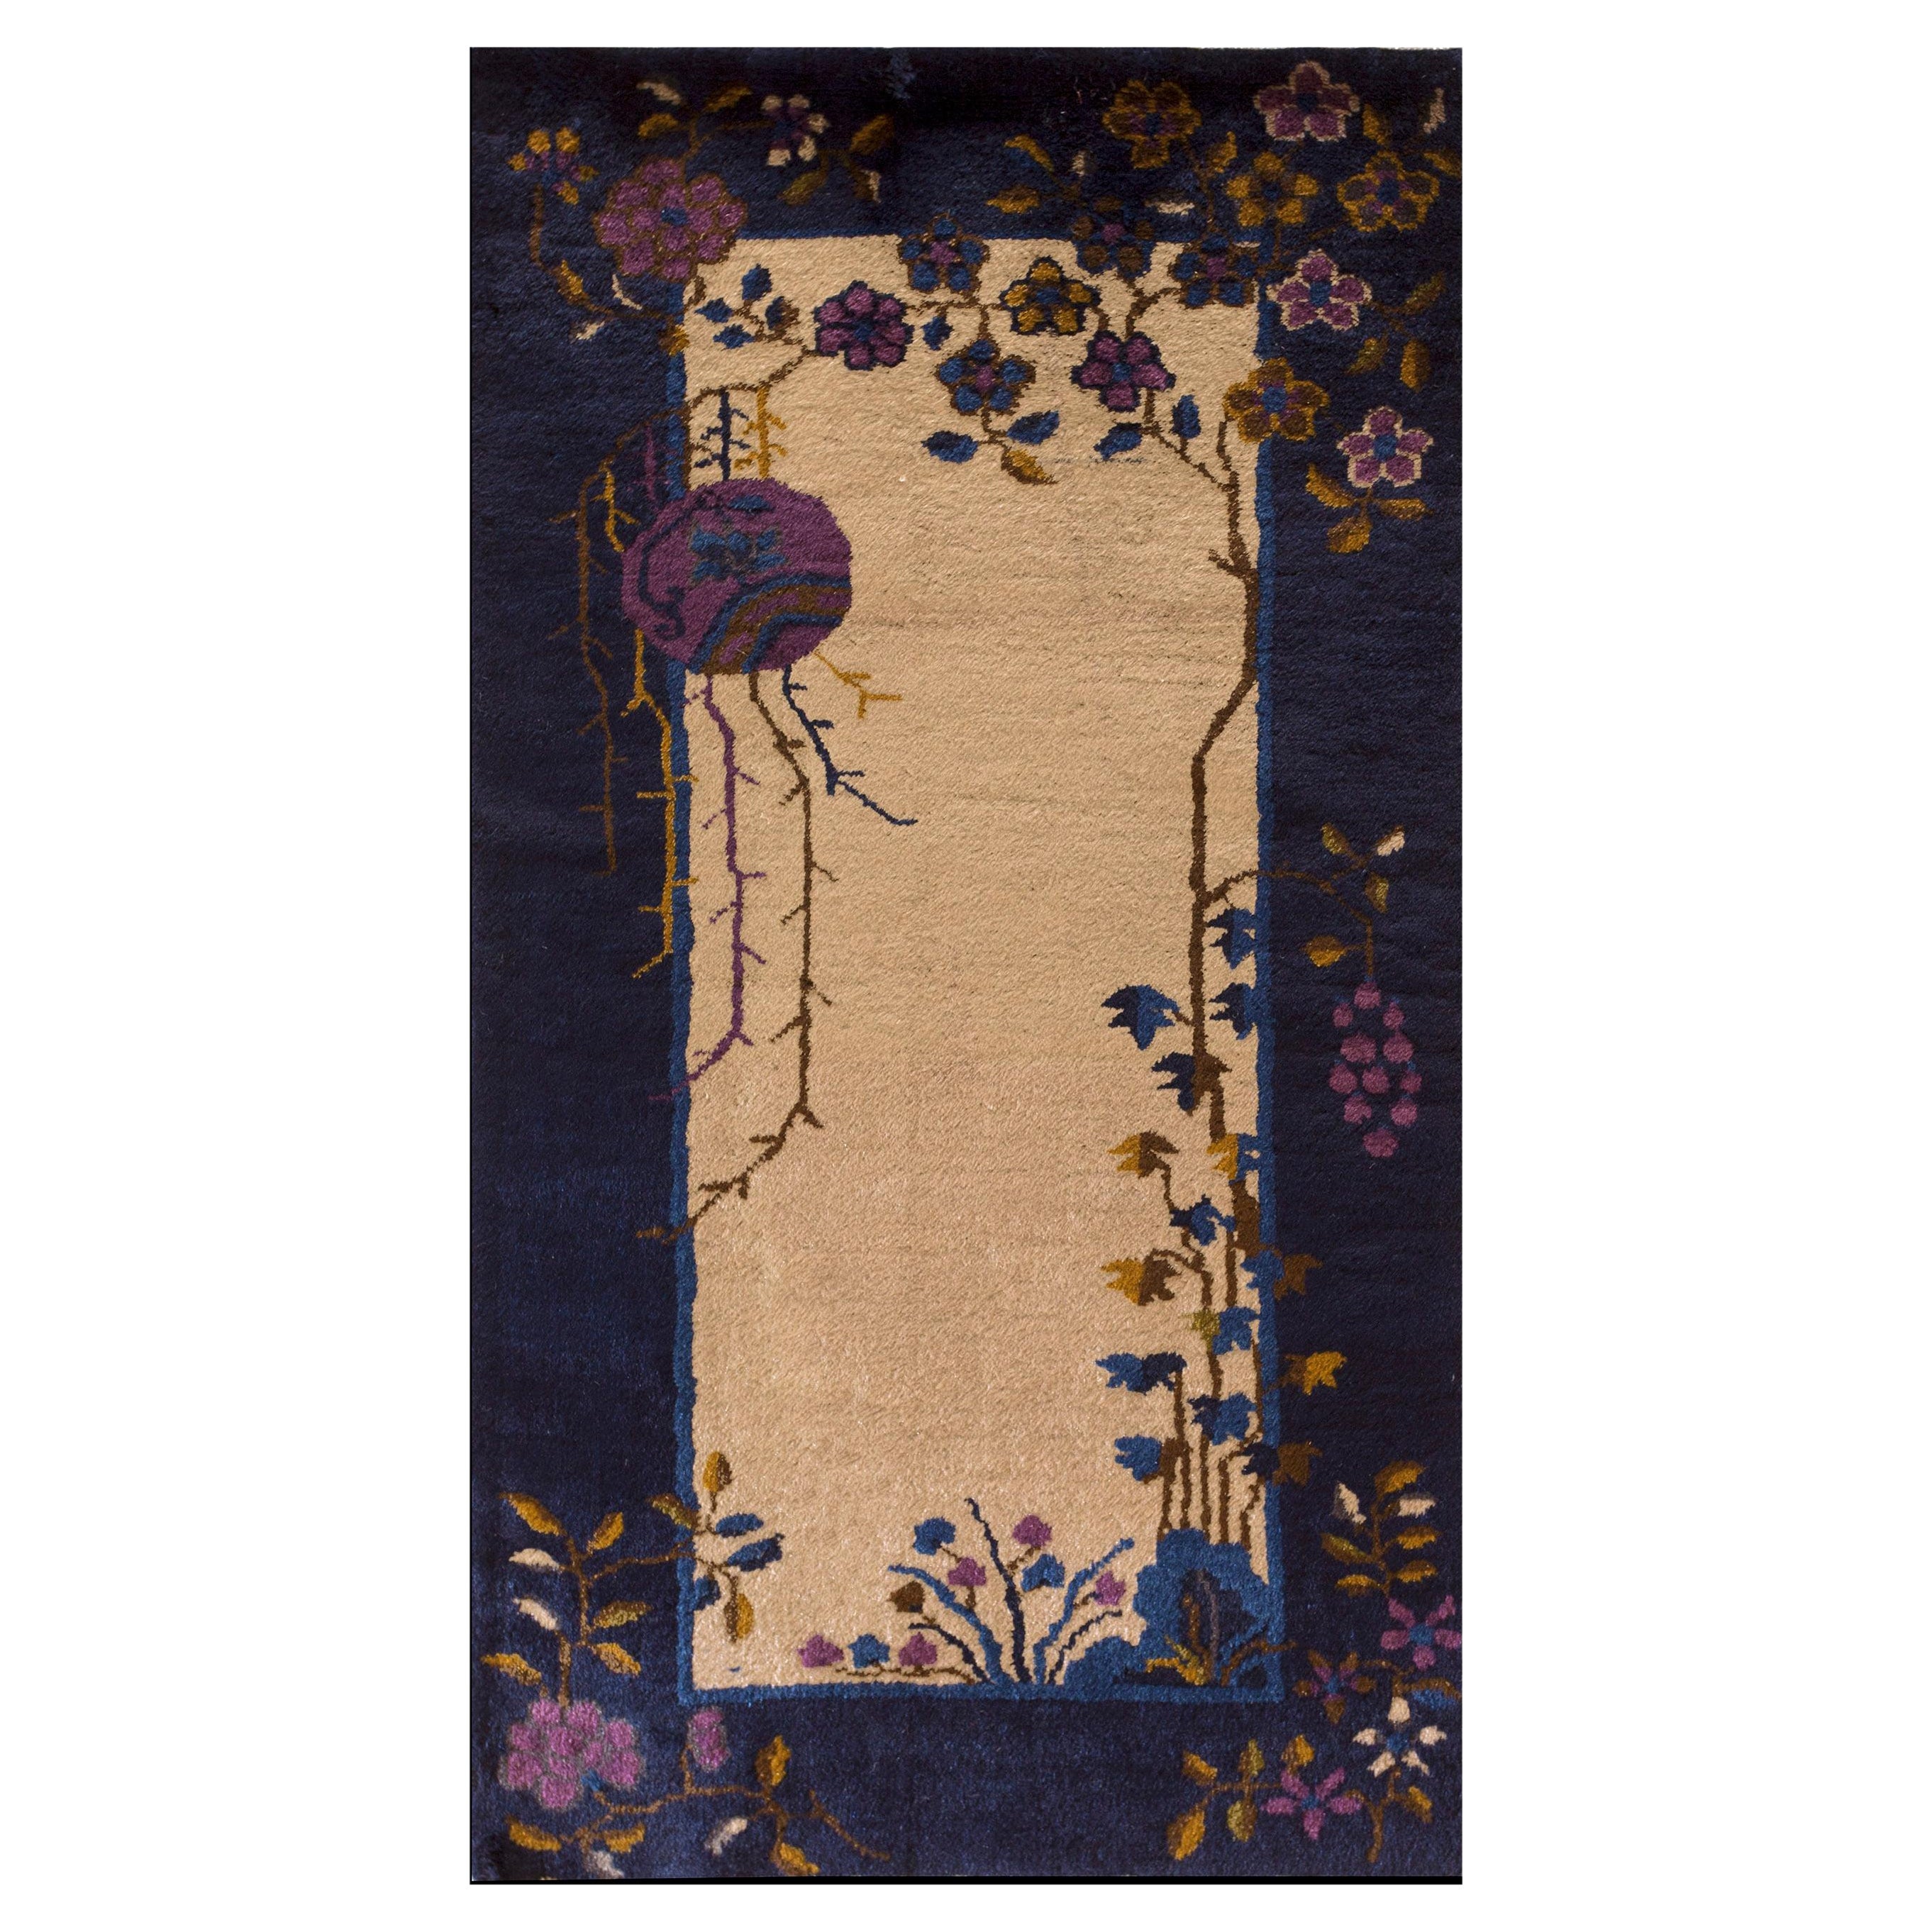 1920s Chinese Art Deco Carpet ( 2' x 3'10" - 61 x 117 )